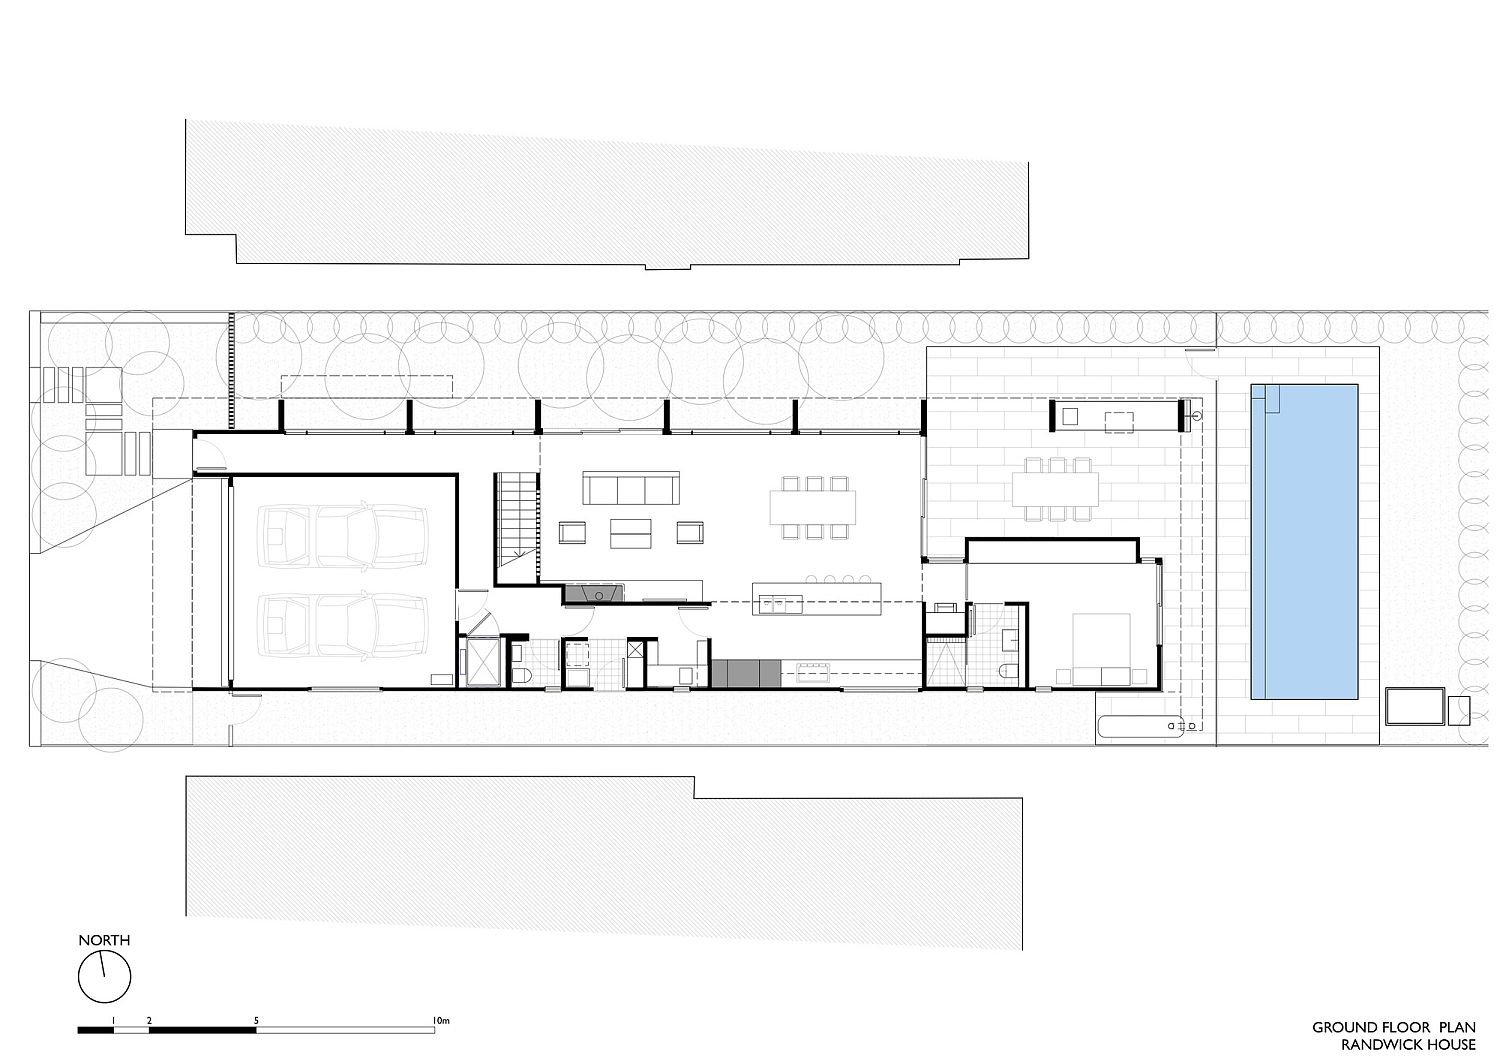 Ground floor plan of Randwick House